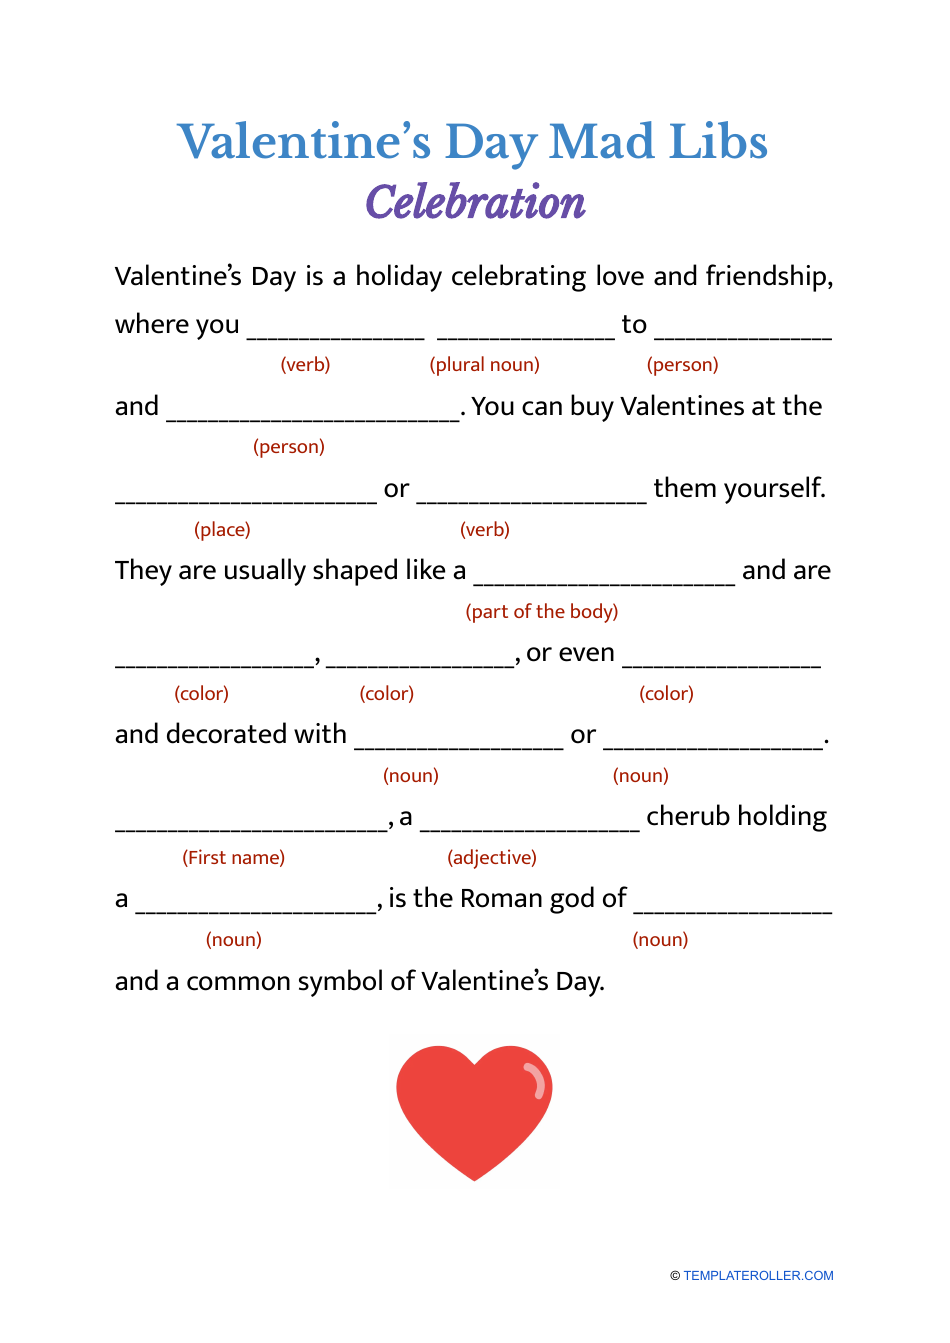 valentine-s-day-mad-libs-celebration-download-printable-pdf